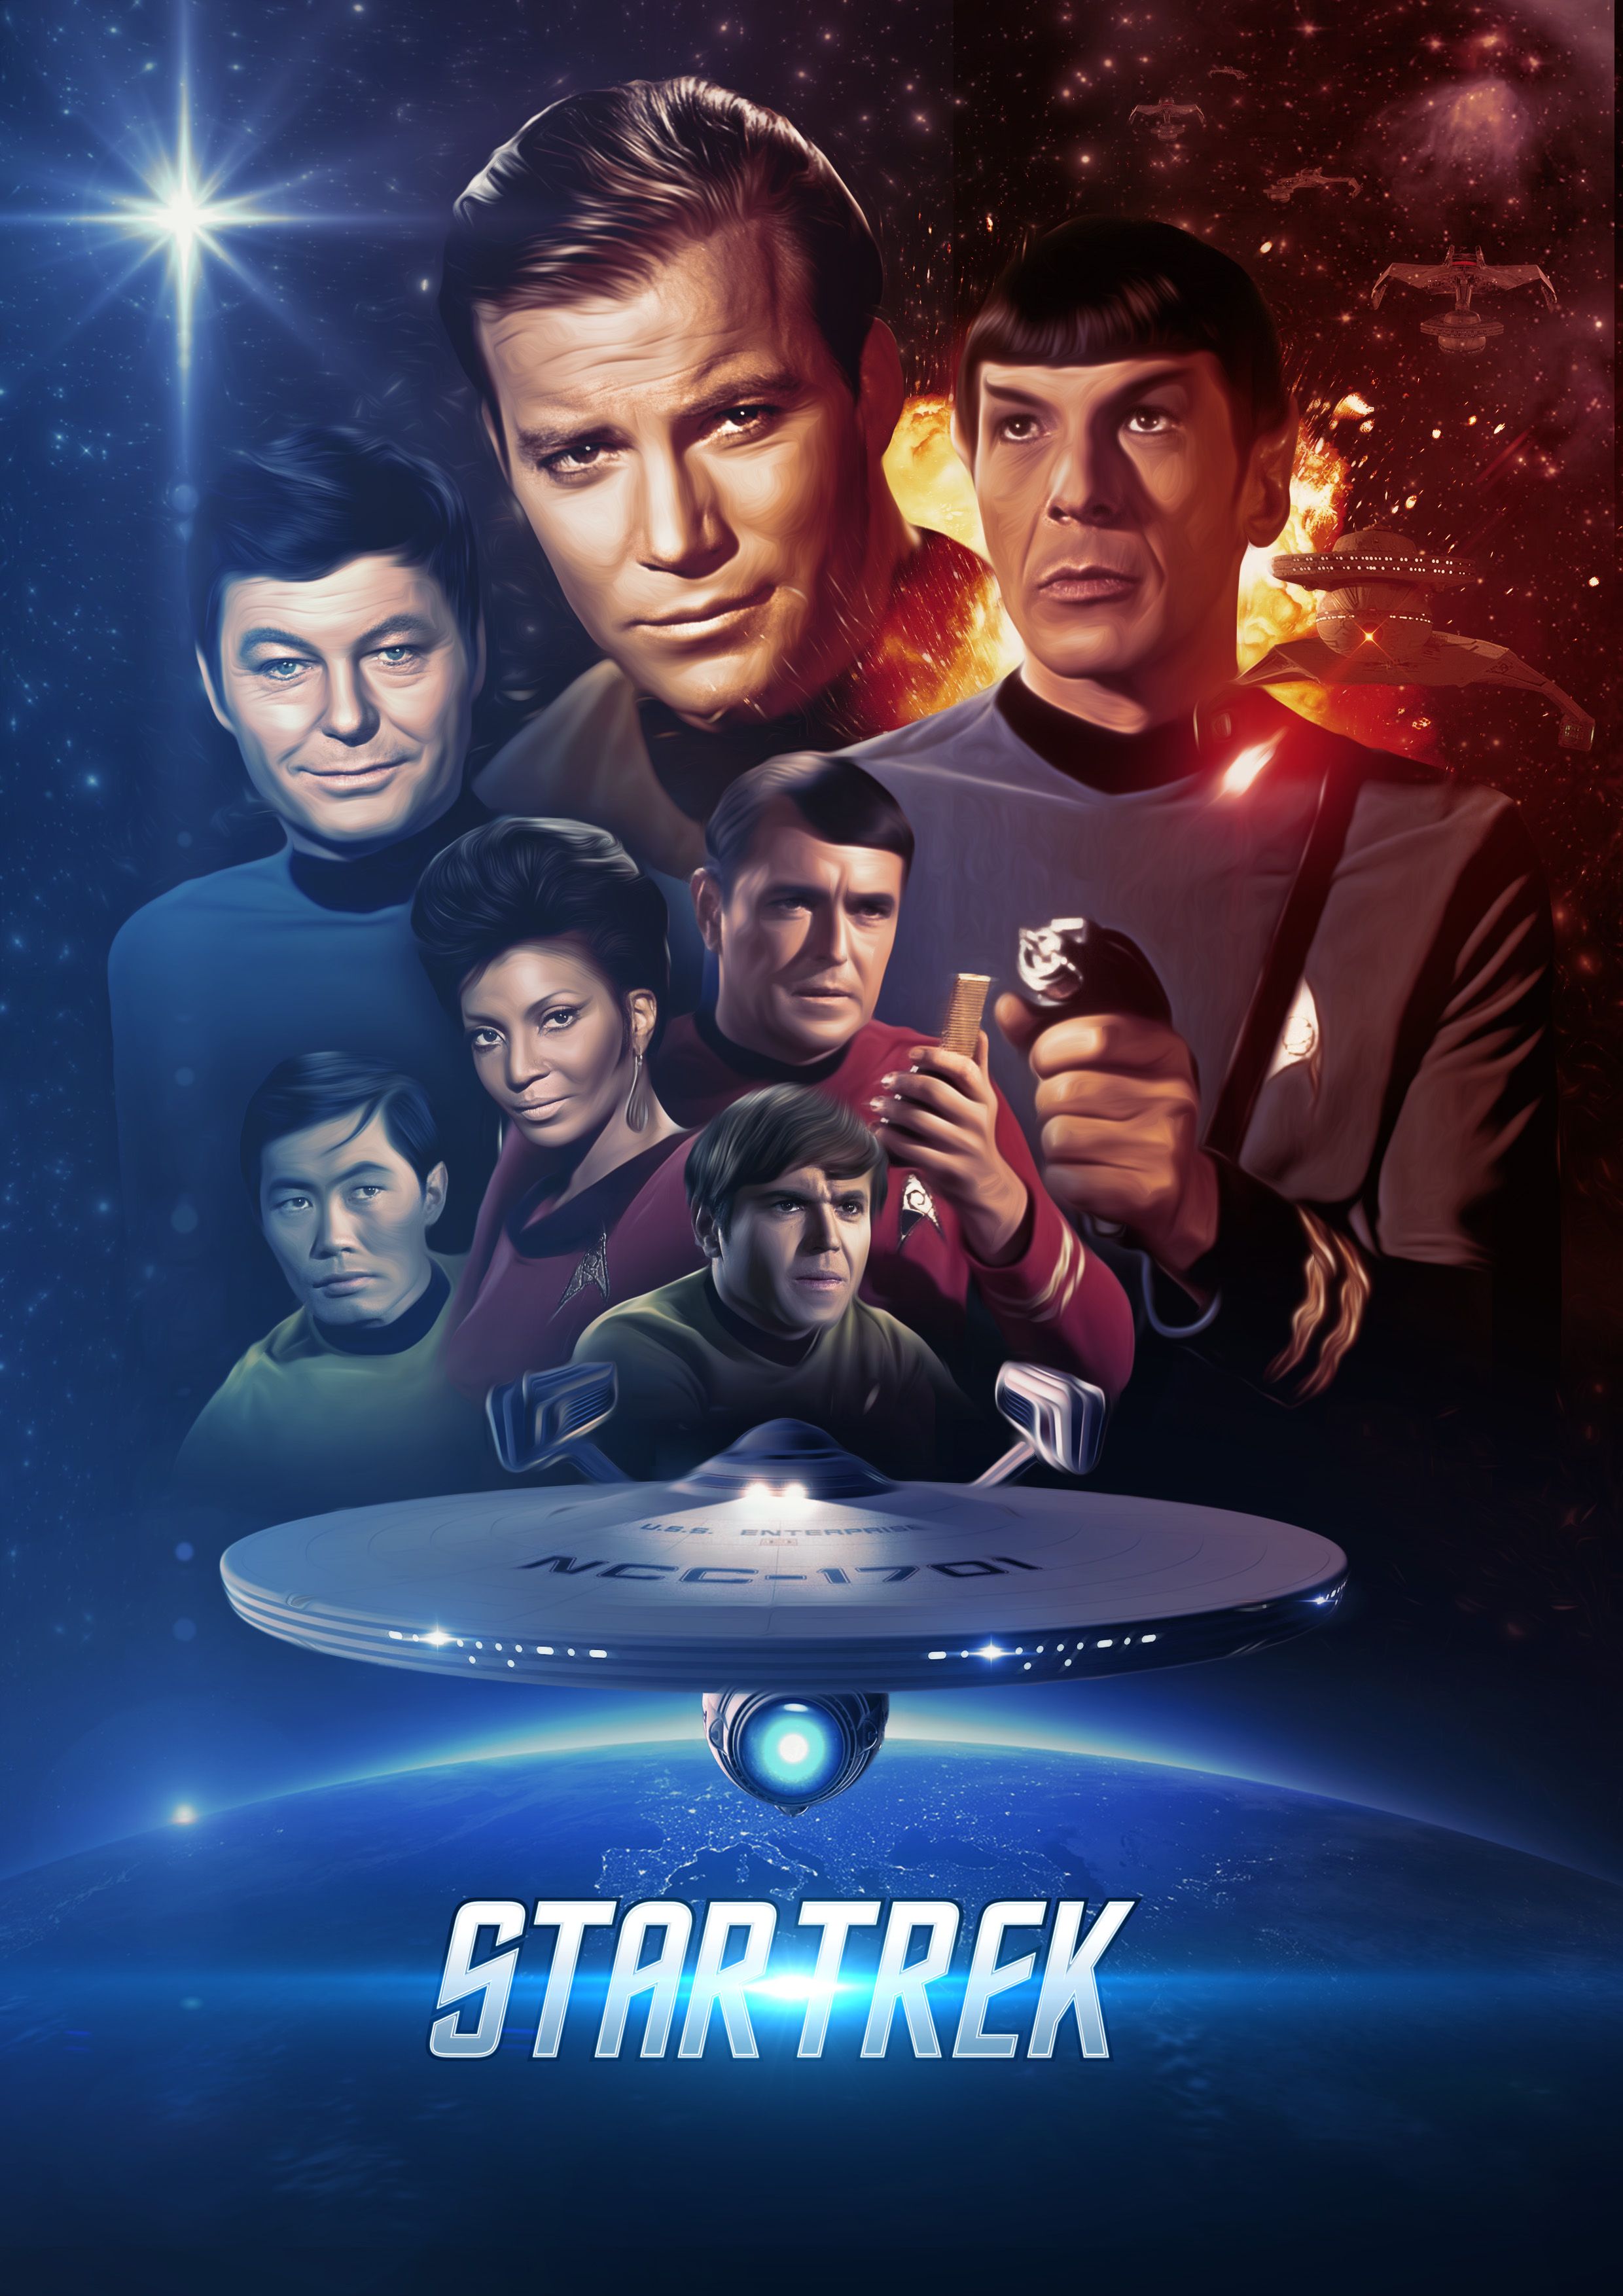 The original Star Trek cast gathered behind an image of the USS Enterprise on a Star Trek poster